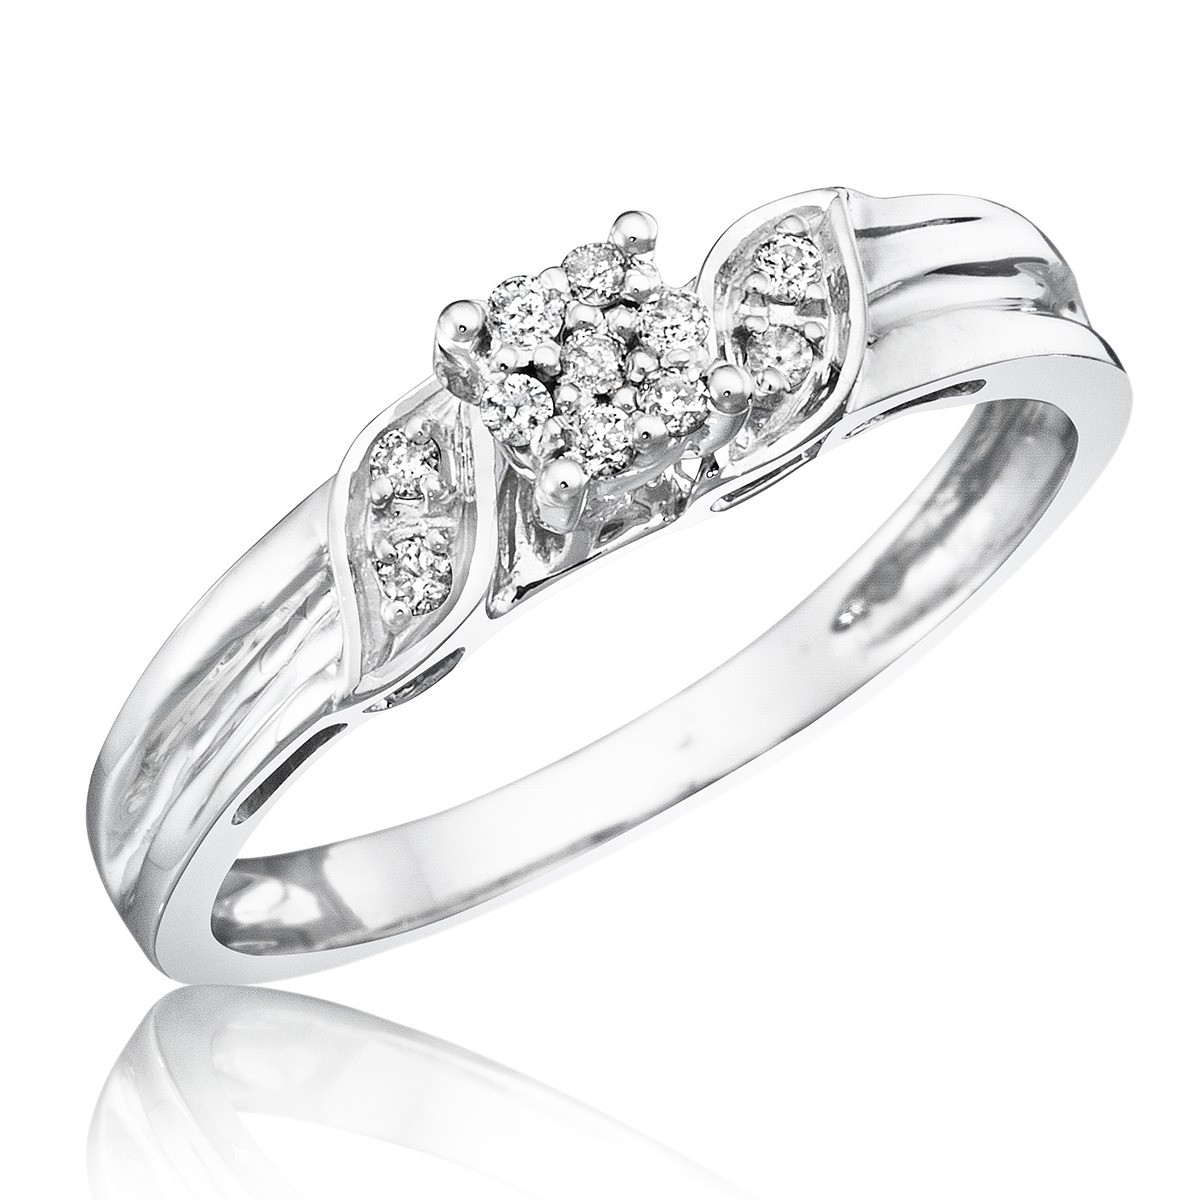 Womens Diamond Engagement Rings
 1 10 Carat T W Diamond Women s Engagement Ring 10K White